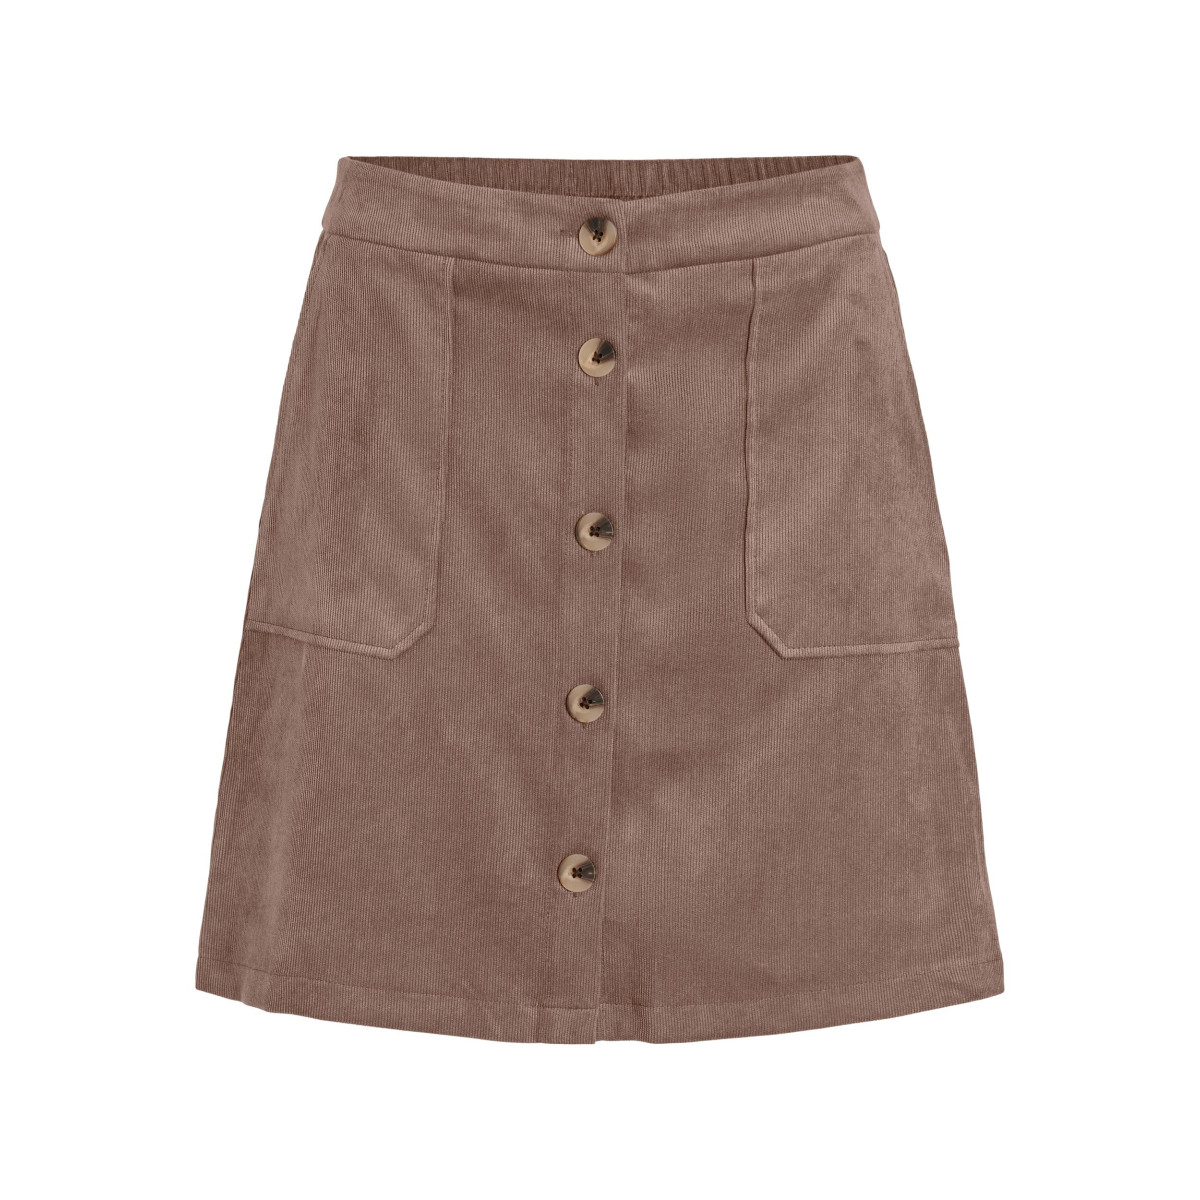 VICOURDIE short skirt